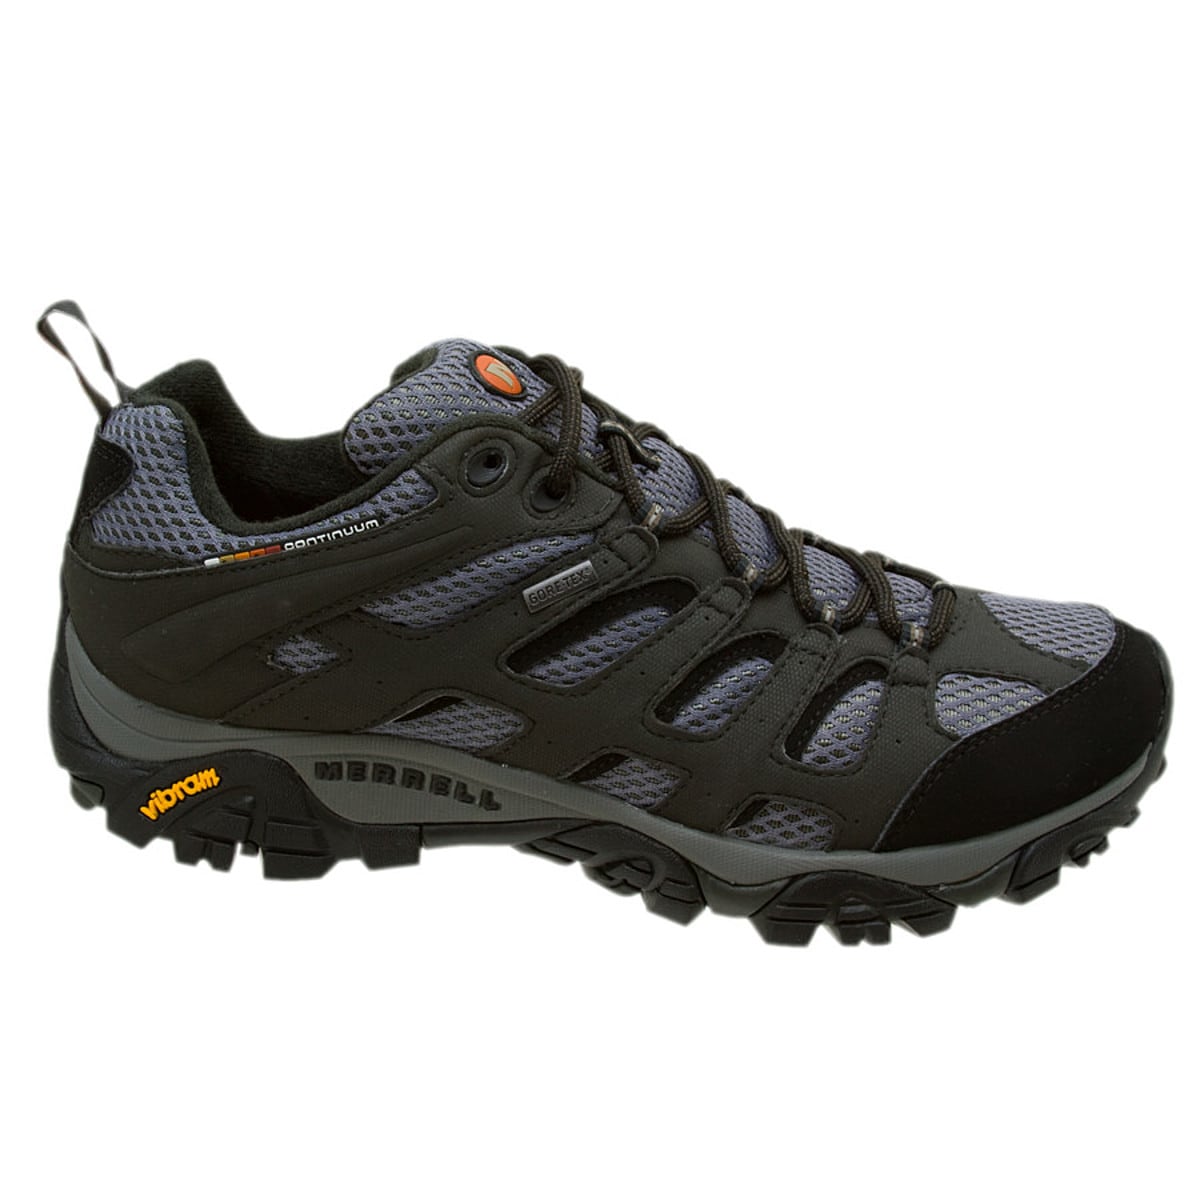 Merrell Moab Gore-Tex Hiking Shoe - Men's Footwear